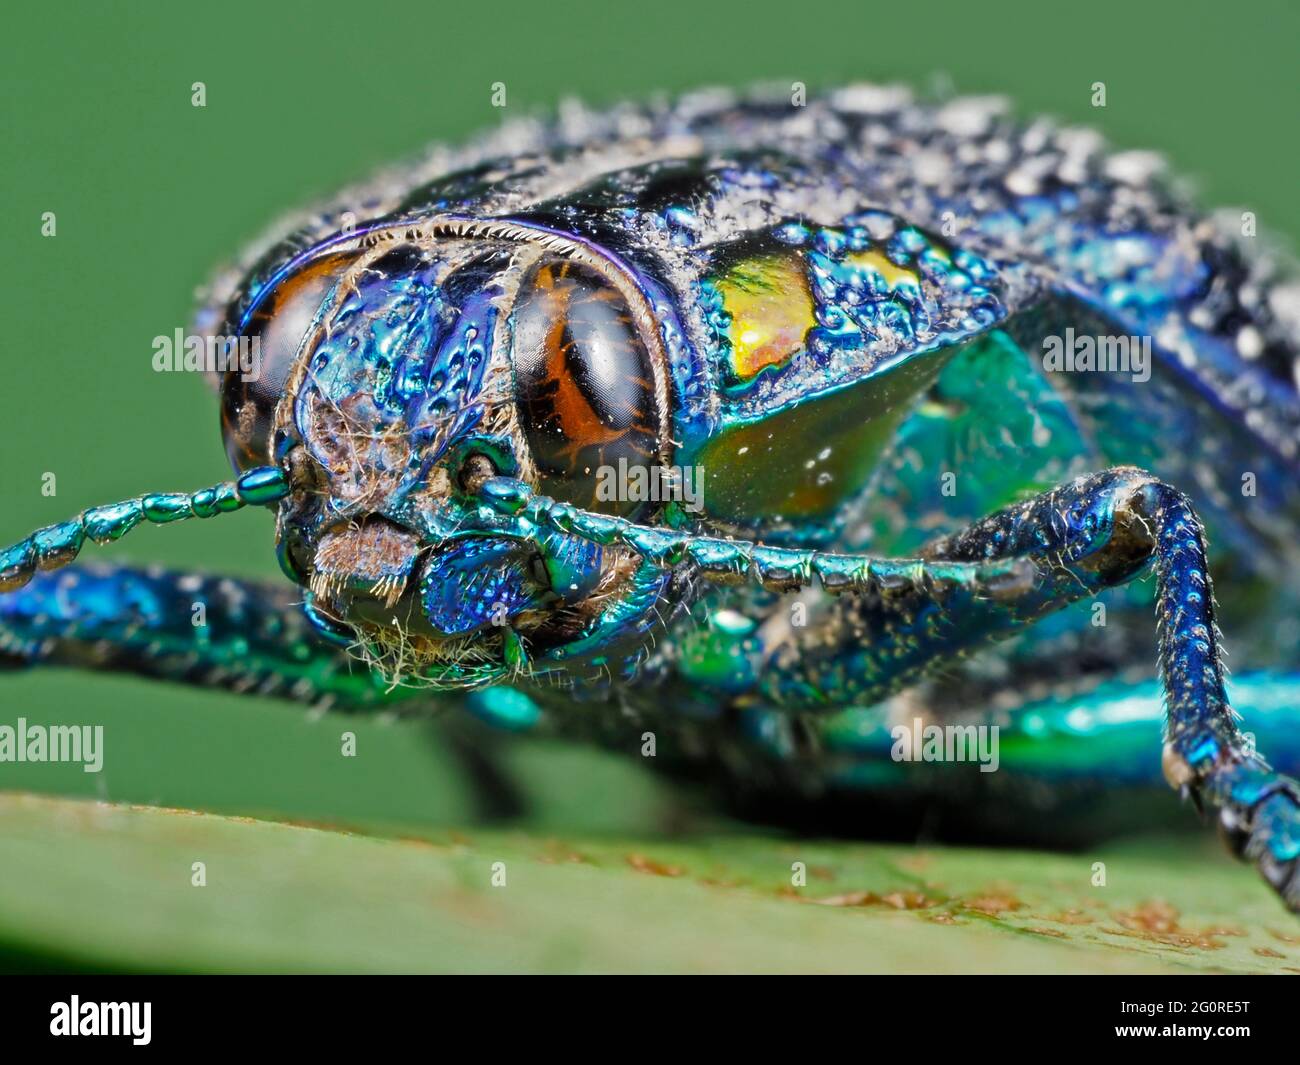 Beetle, (Polybothris sumptuosa) Blue, MADAGASCAR, Stacked Focus, set specimen, close up showing face with large compound eye, antennae Stock Photo